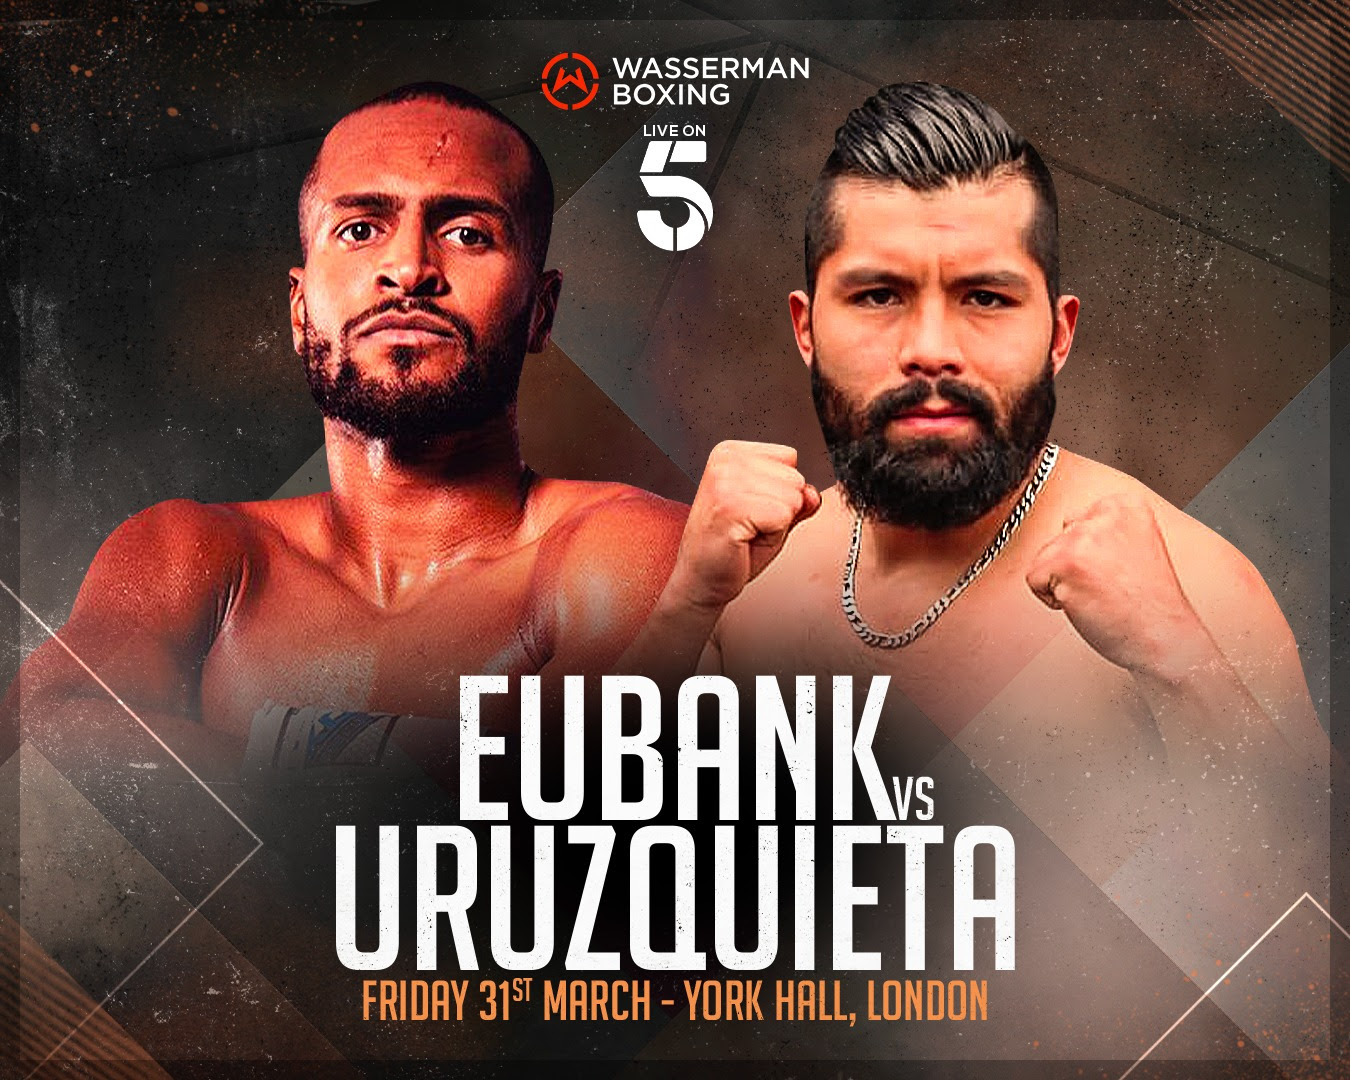 Full undercard confirmed for Harlem Eubank - Christian Uruzquieta